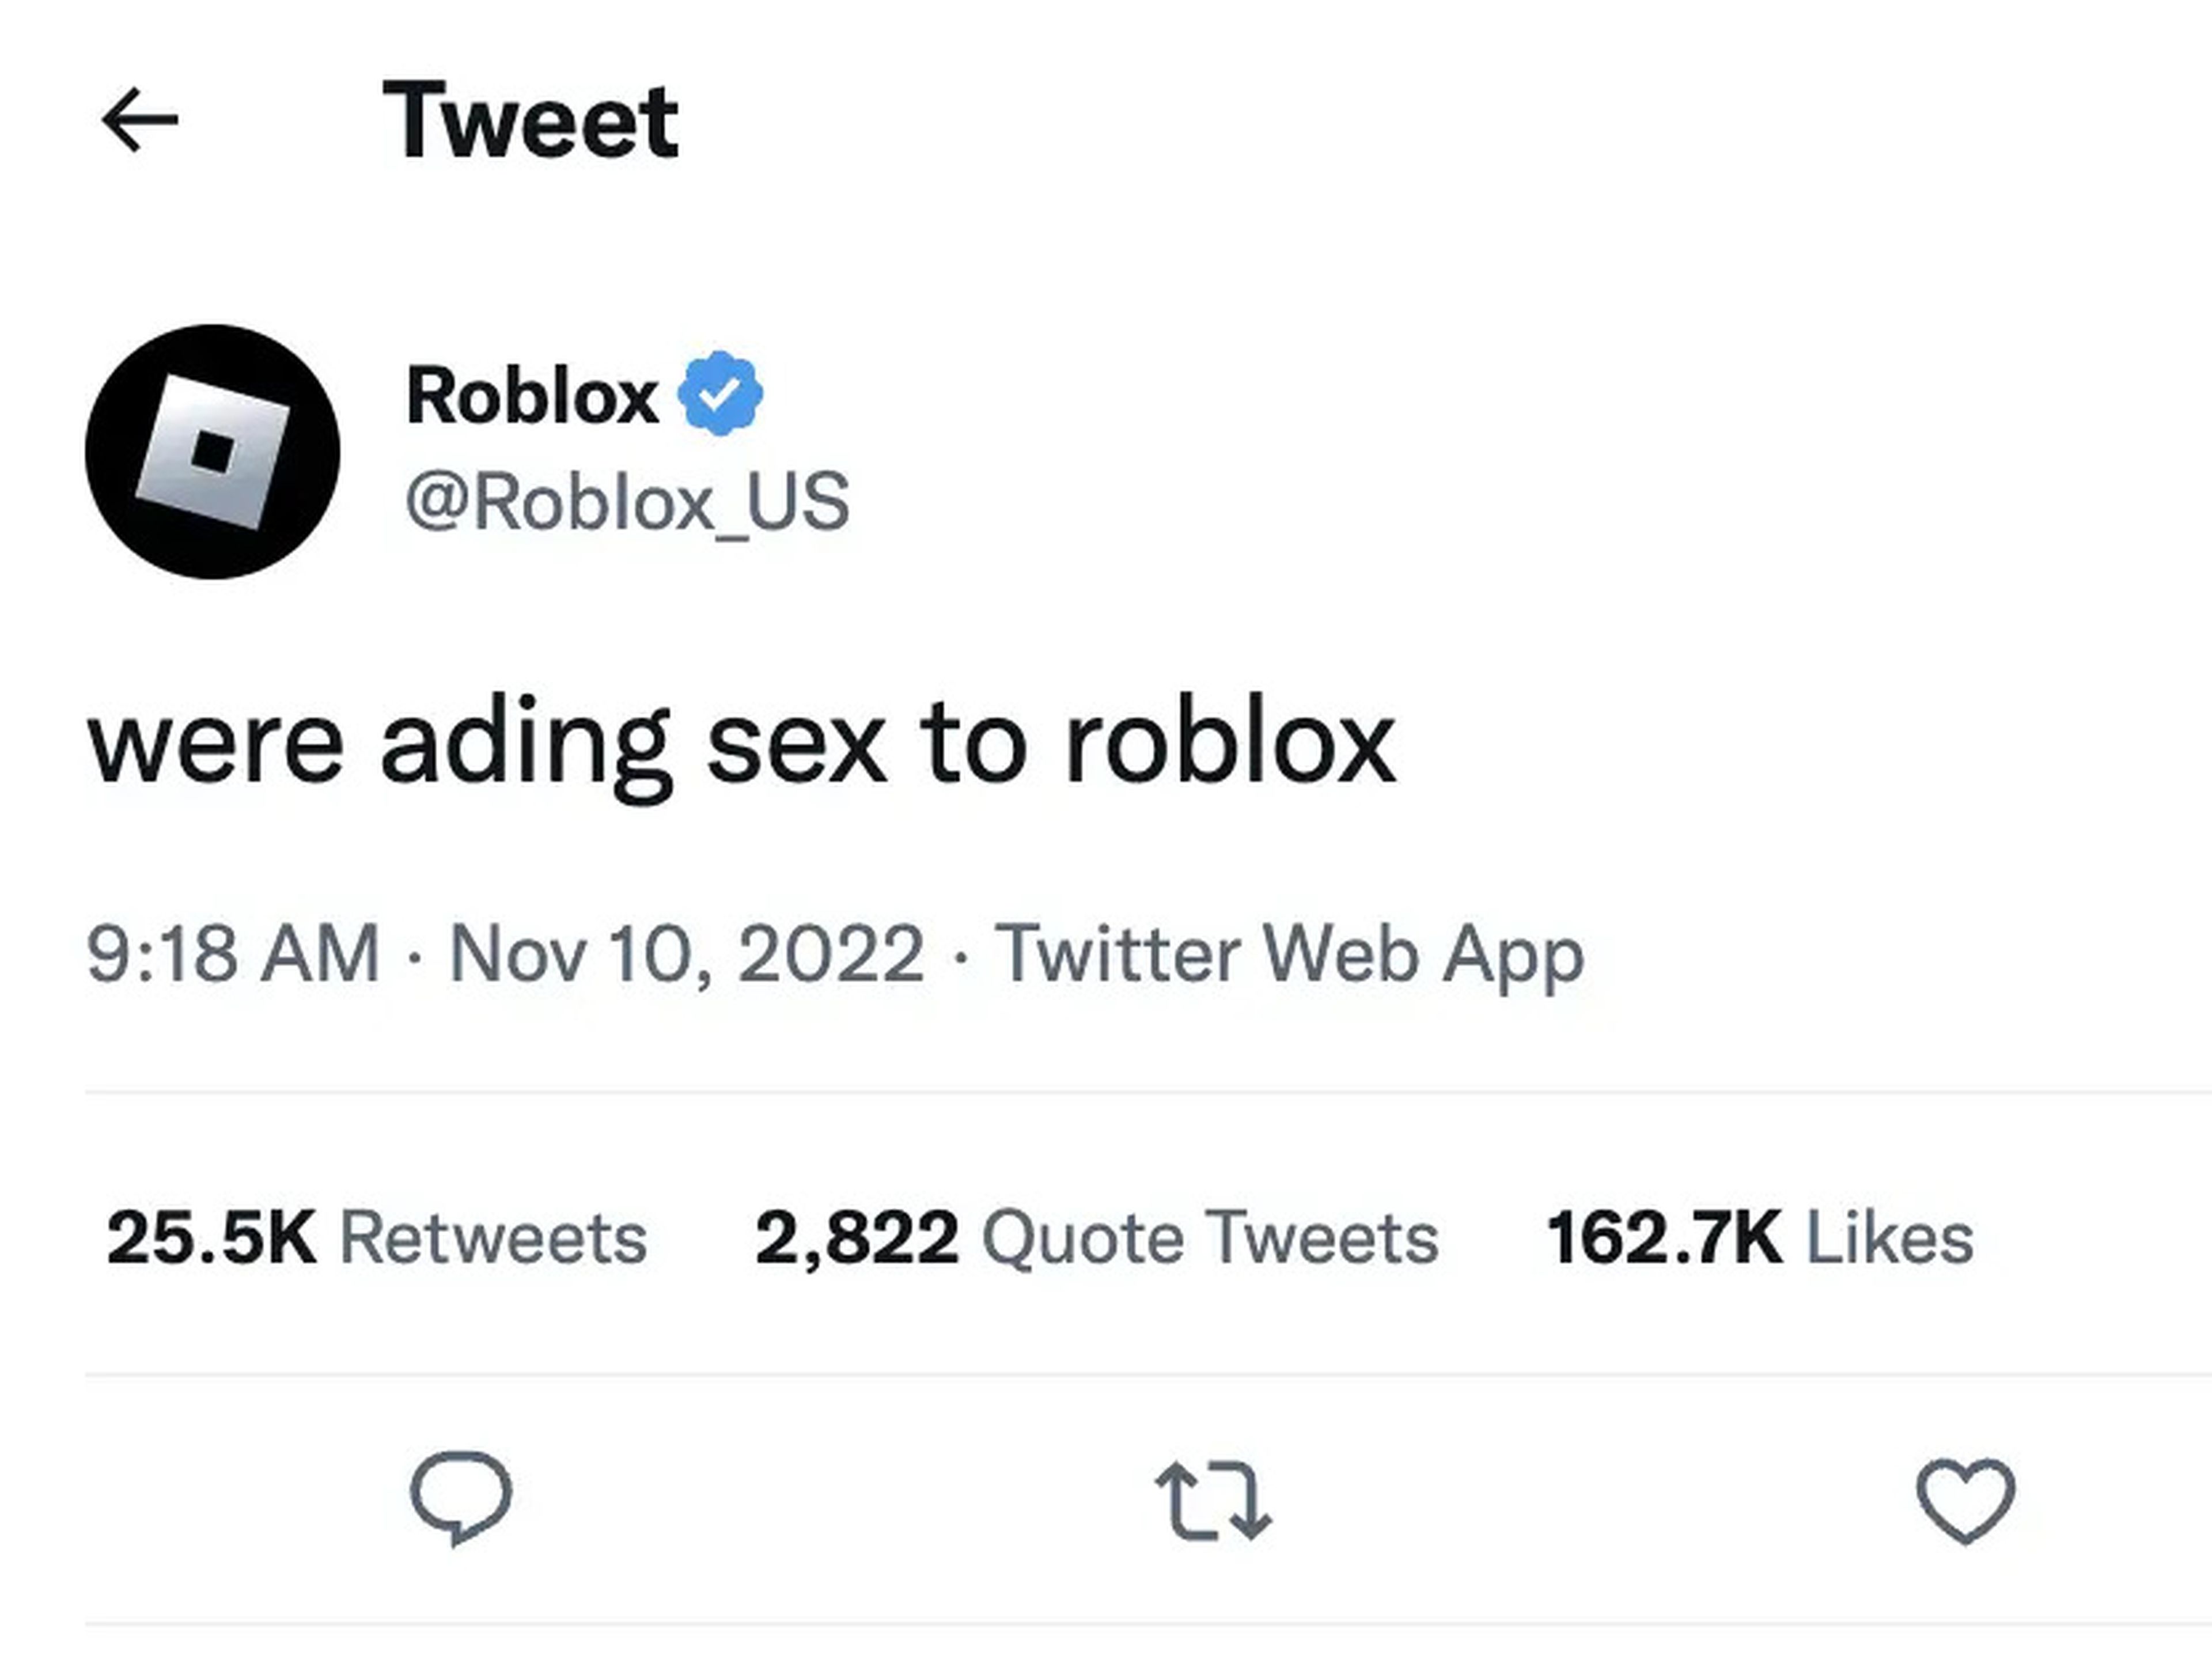 Tweet from gaming platform Roblox impersonator.